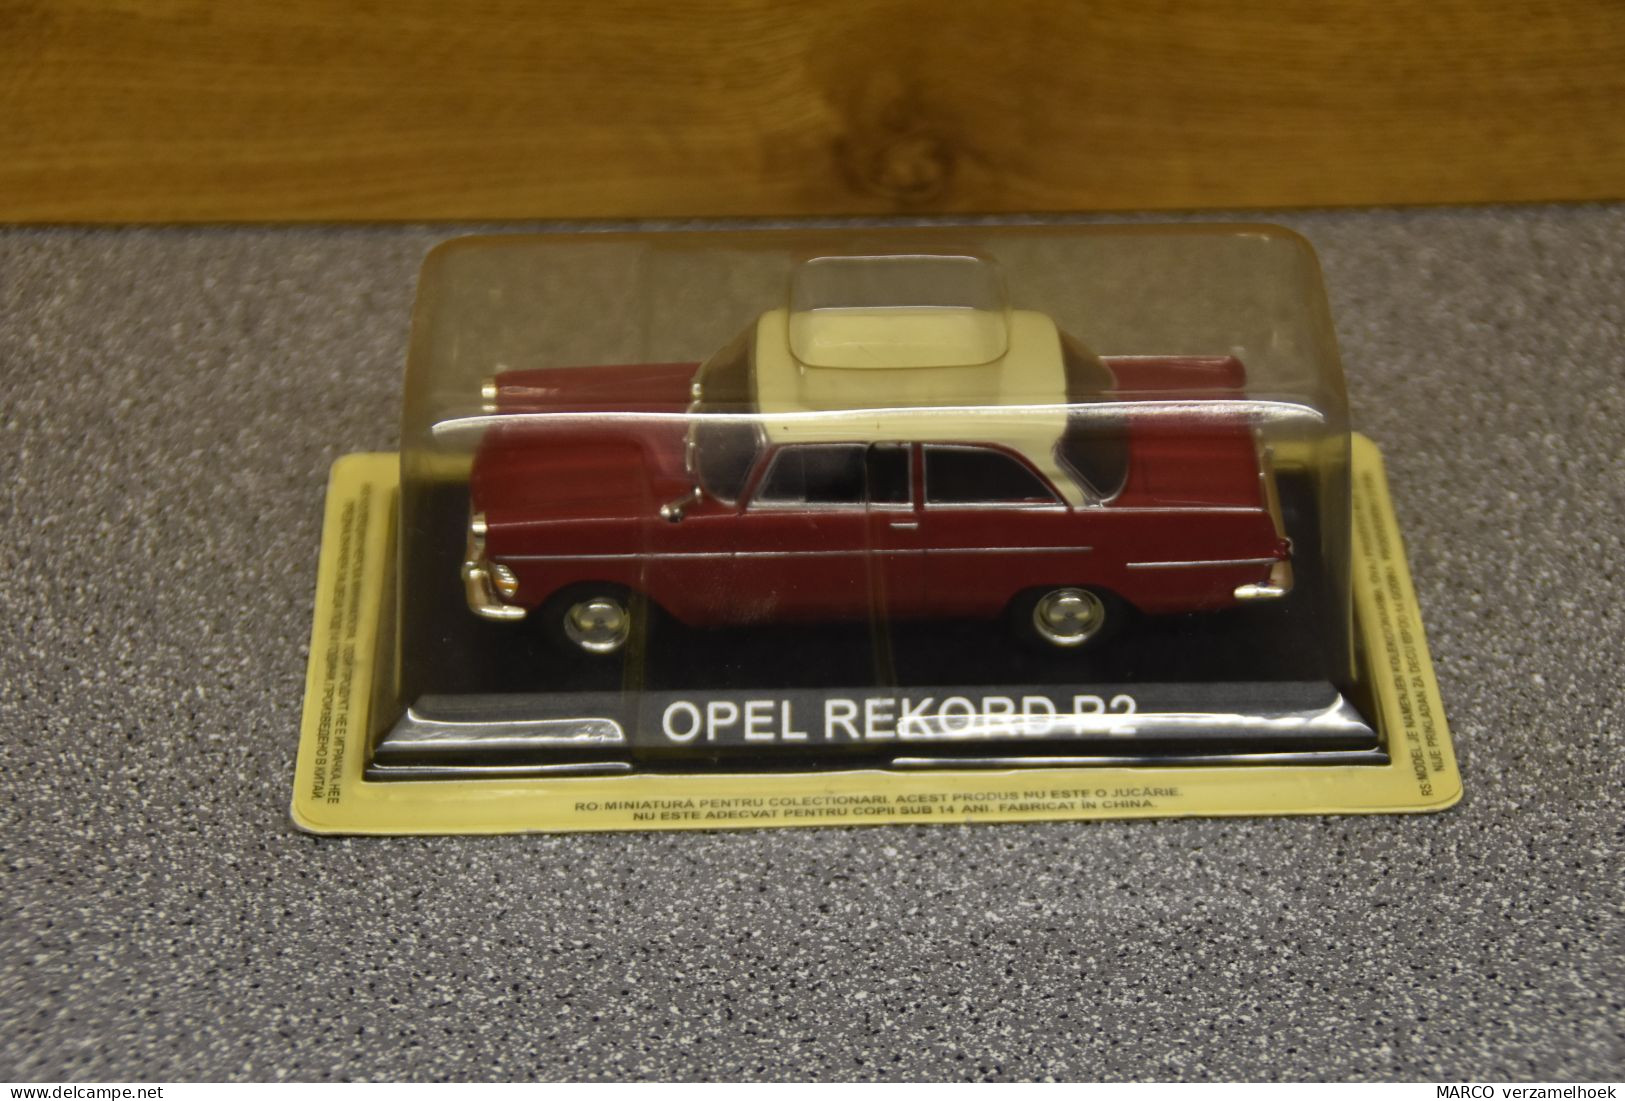 Opel Rekord PII 1962 Atlas Edition PR56 Scale 1:43 - Corgi Toys